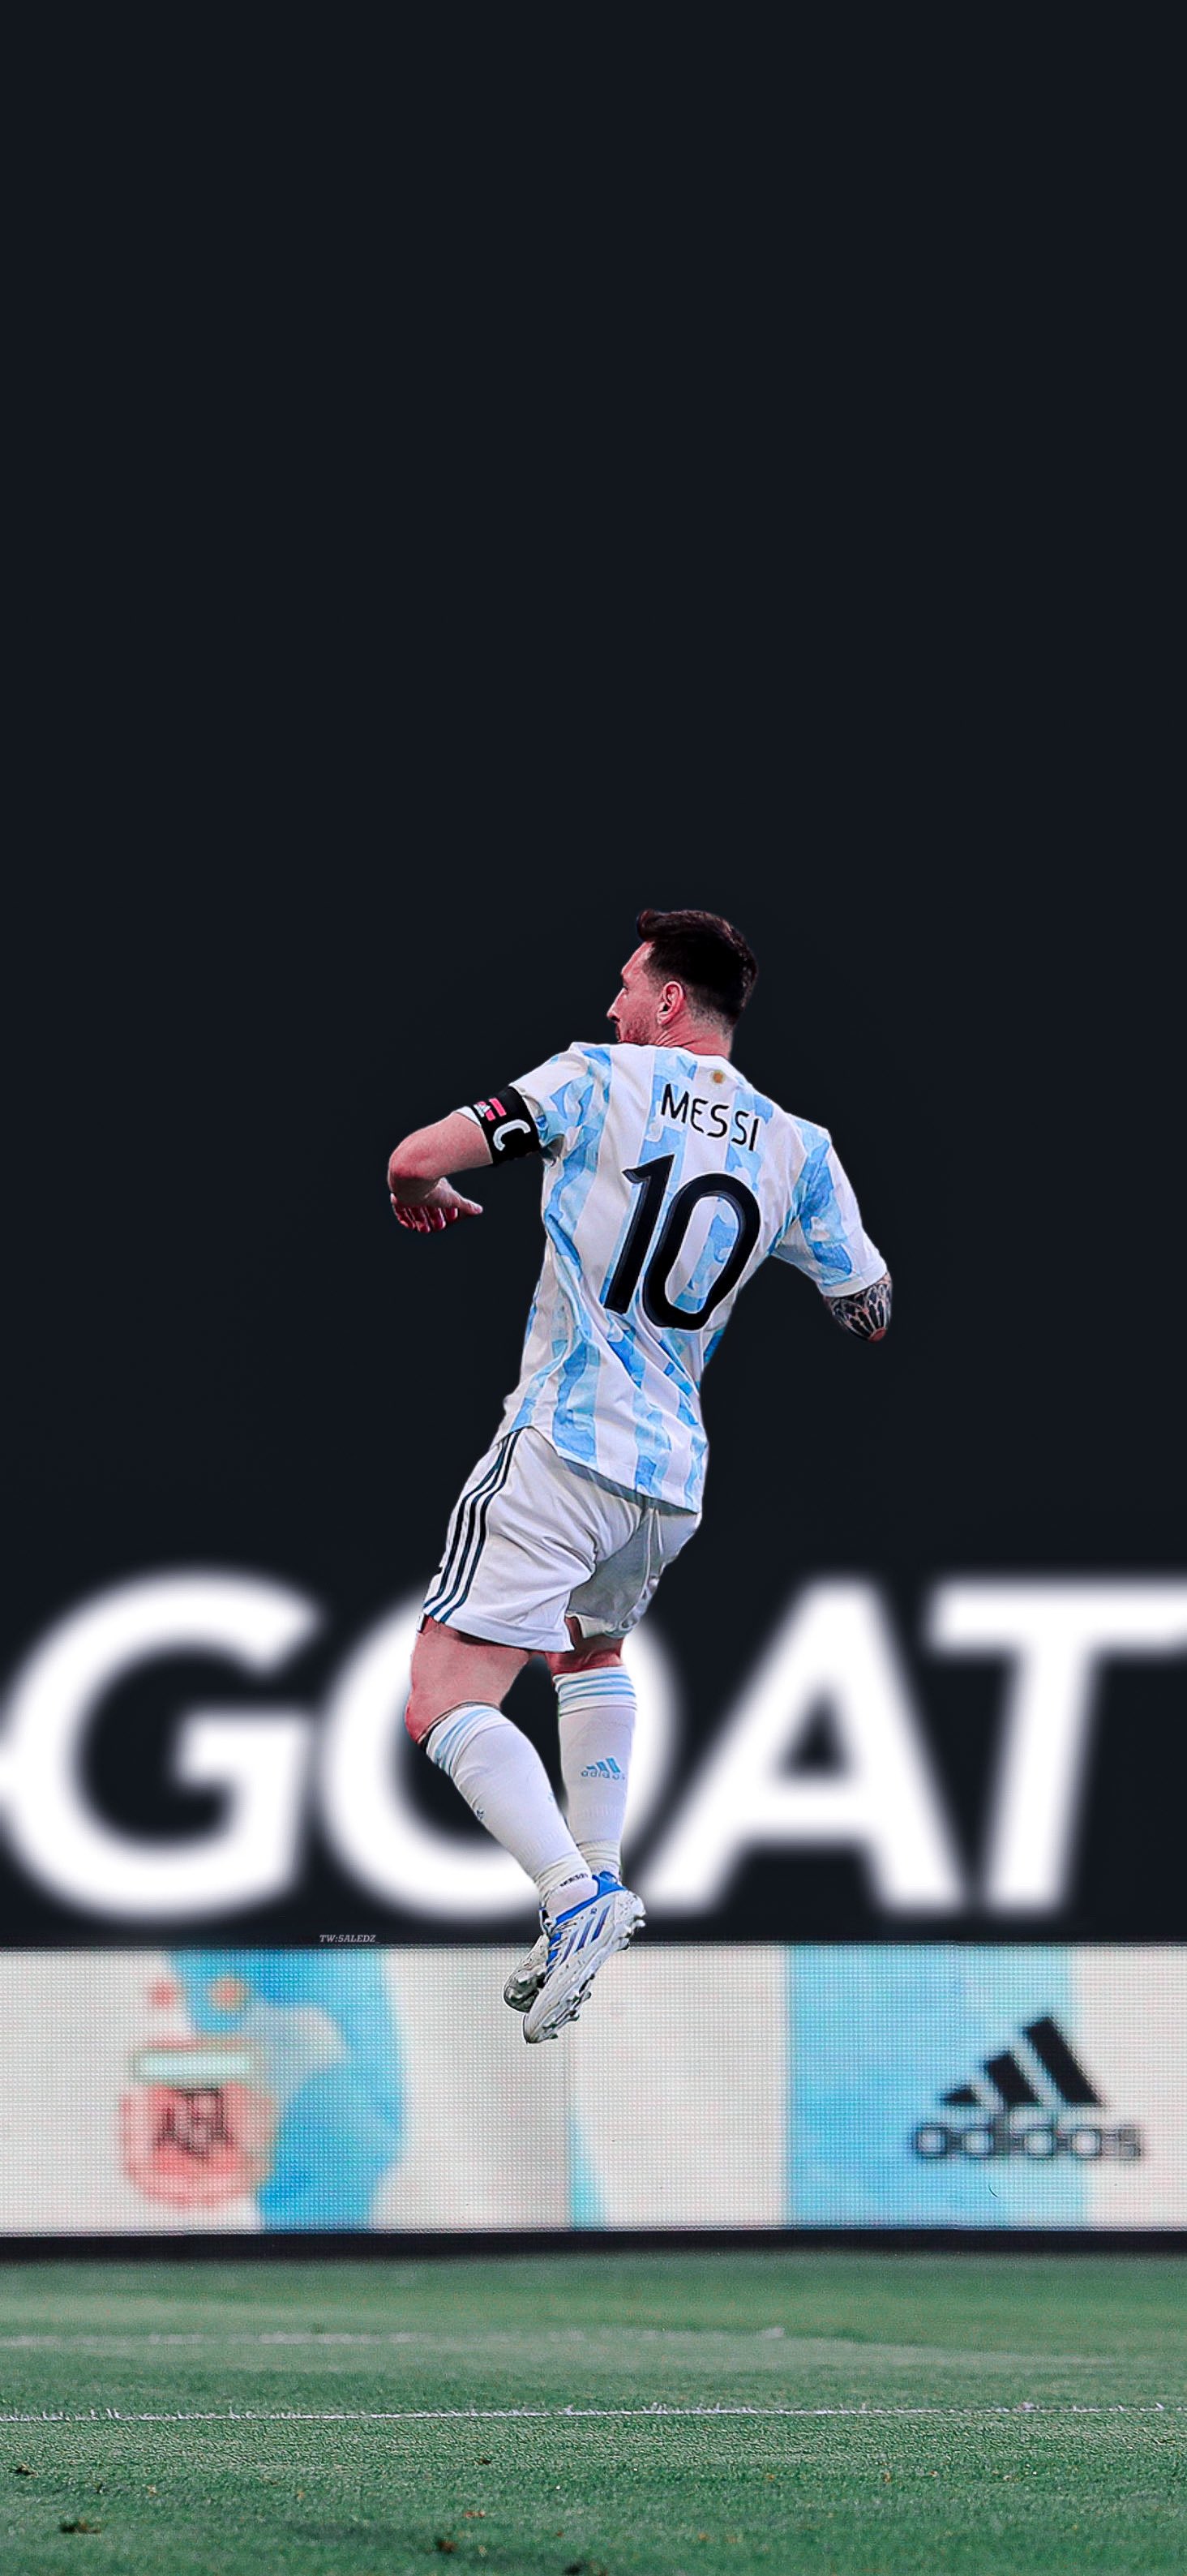 Chân dung messi wallpaper in argentina Messi tuyệt đẹp